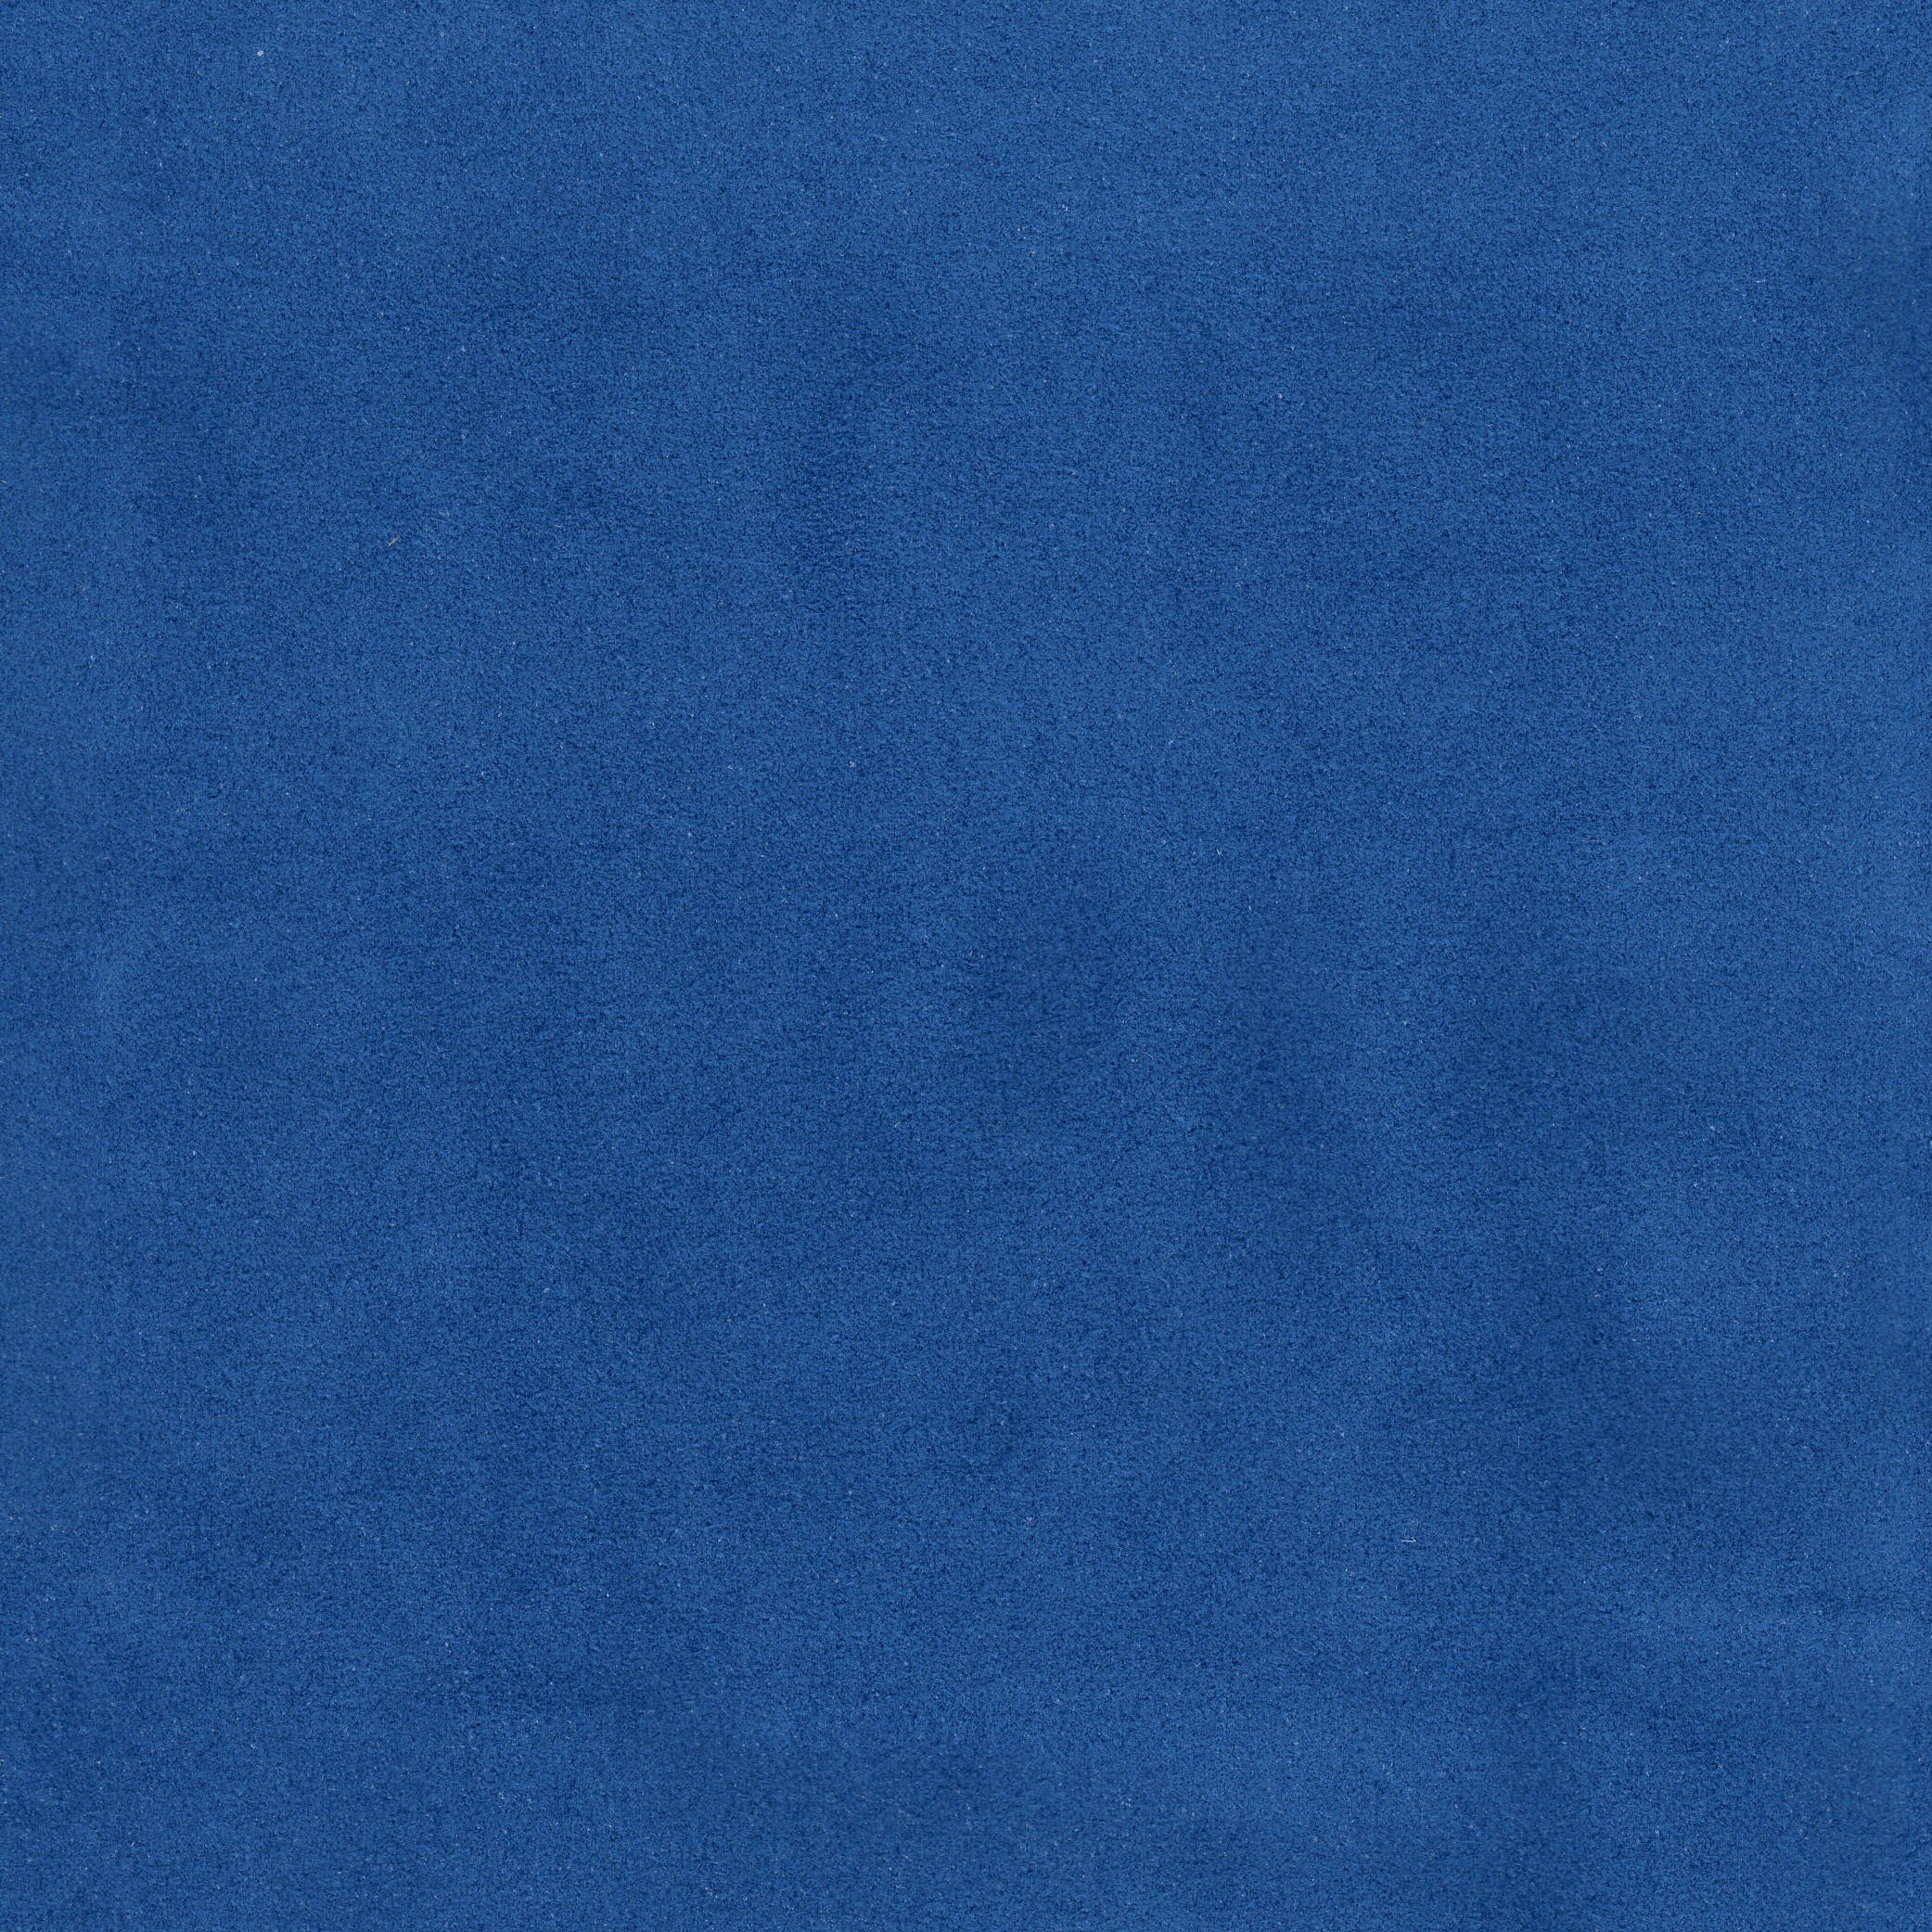 Ultrasuede - 2530 Regal Blue (Copy)